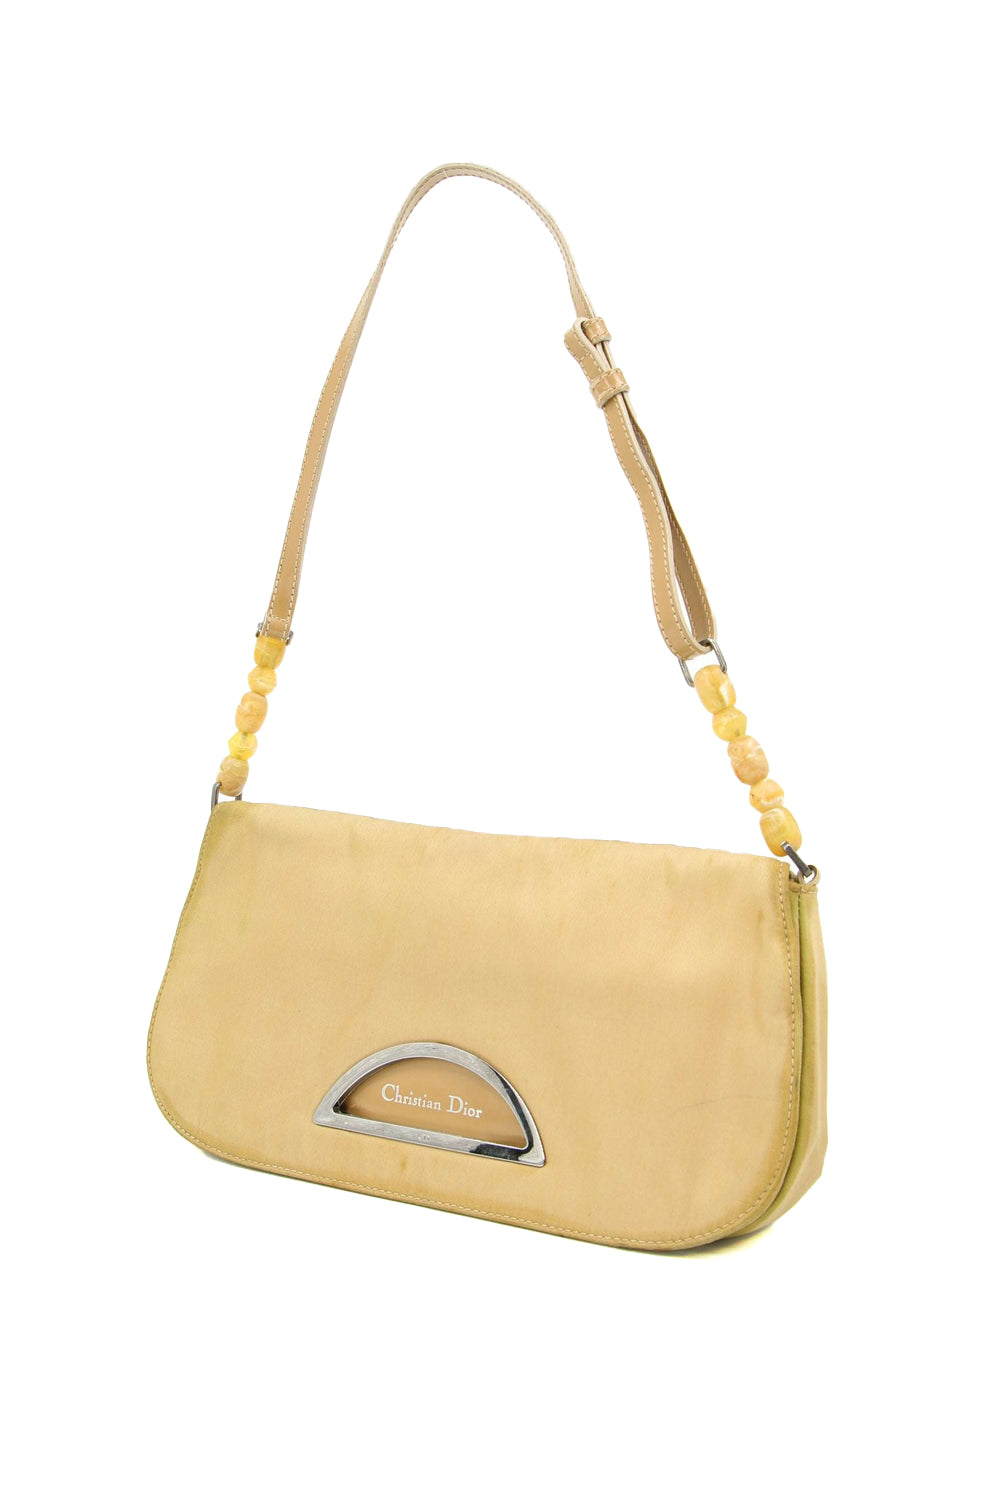 Christian Dior Handbags - Maris Pearl Black Patent Leather Bag